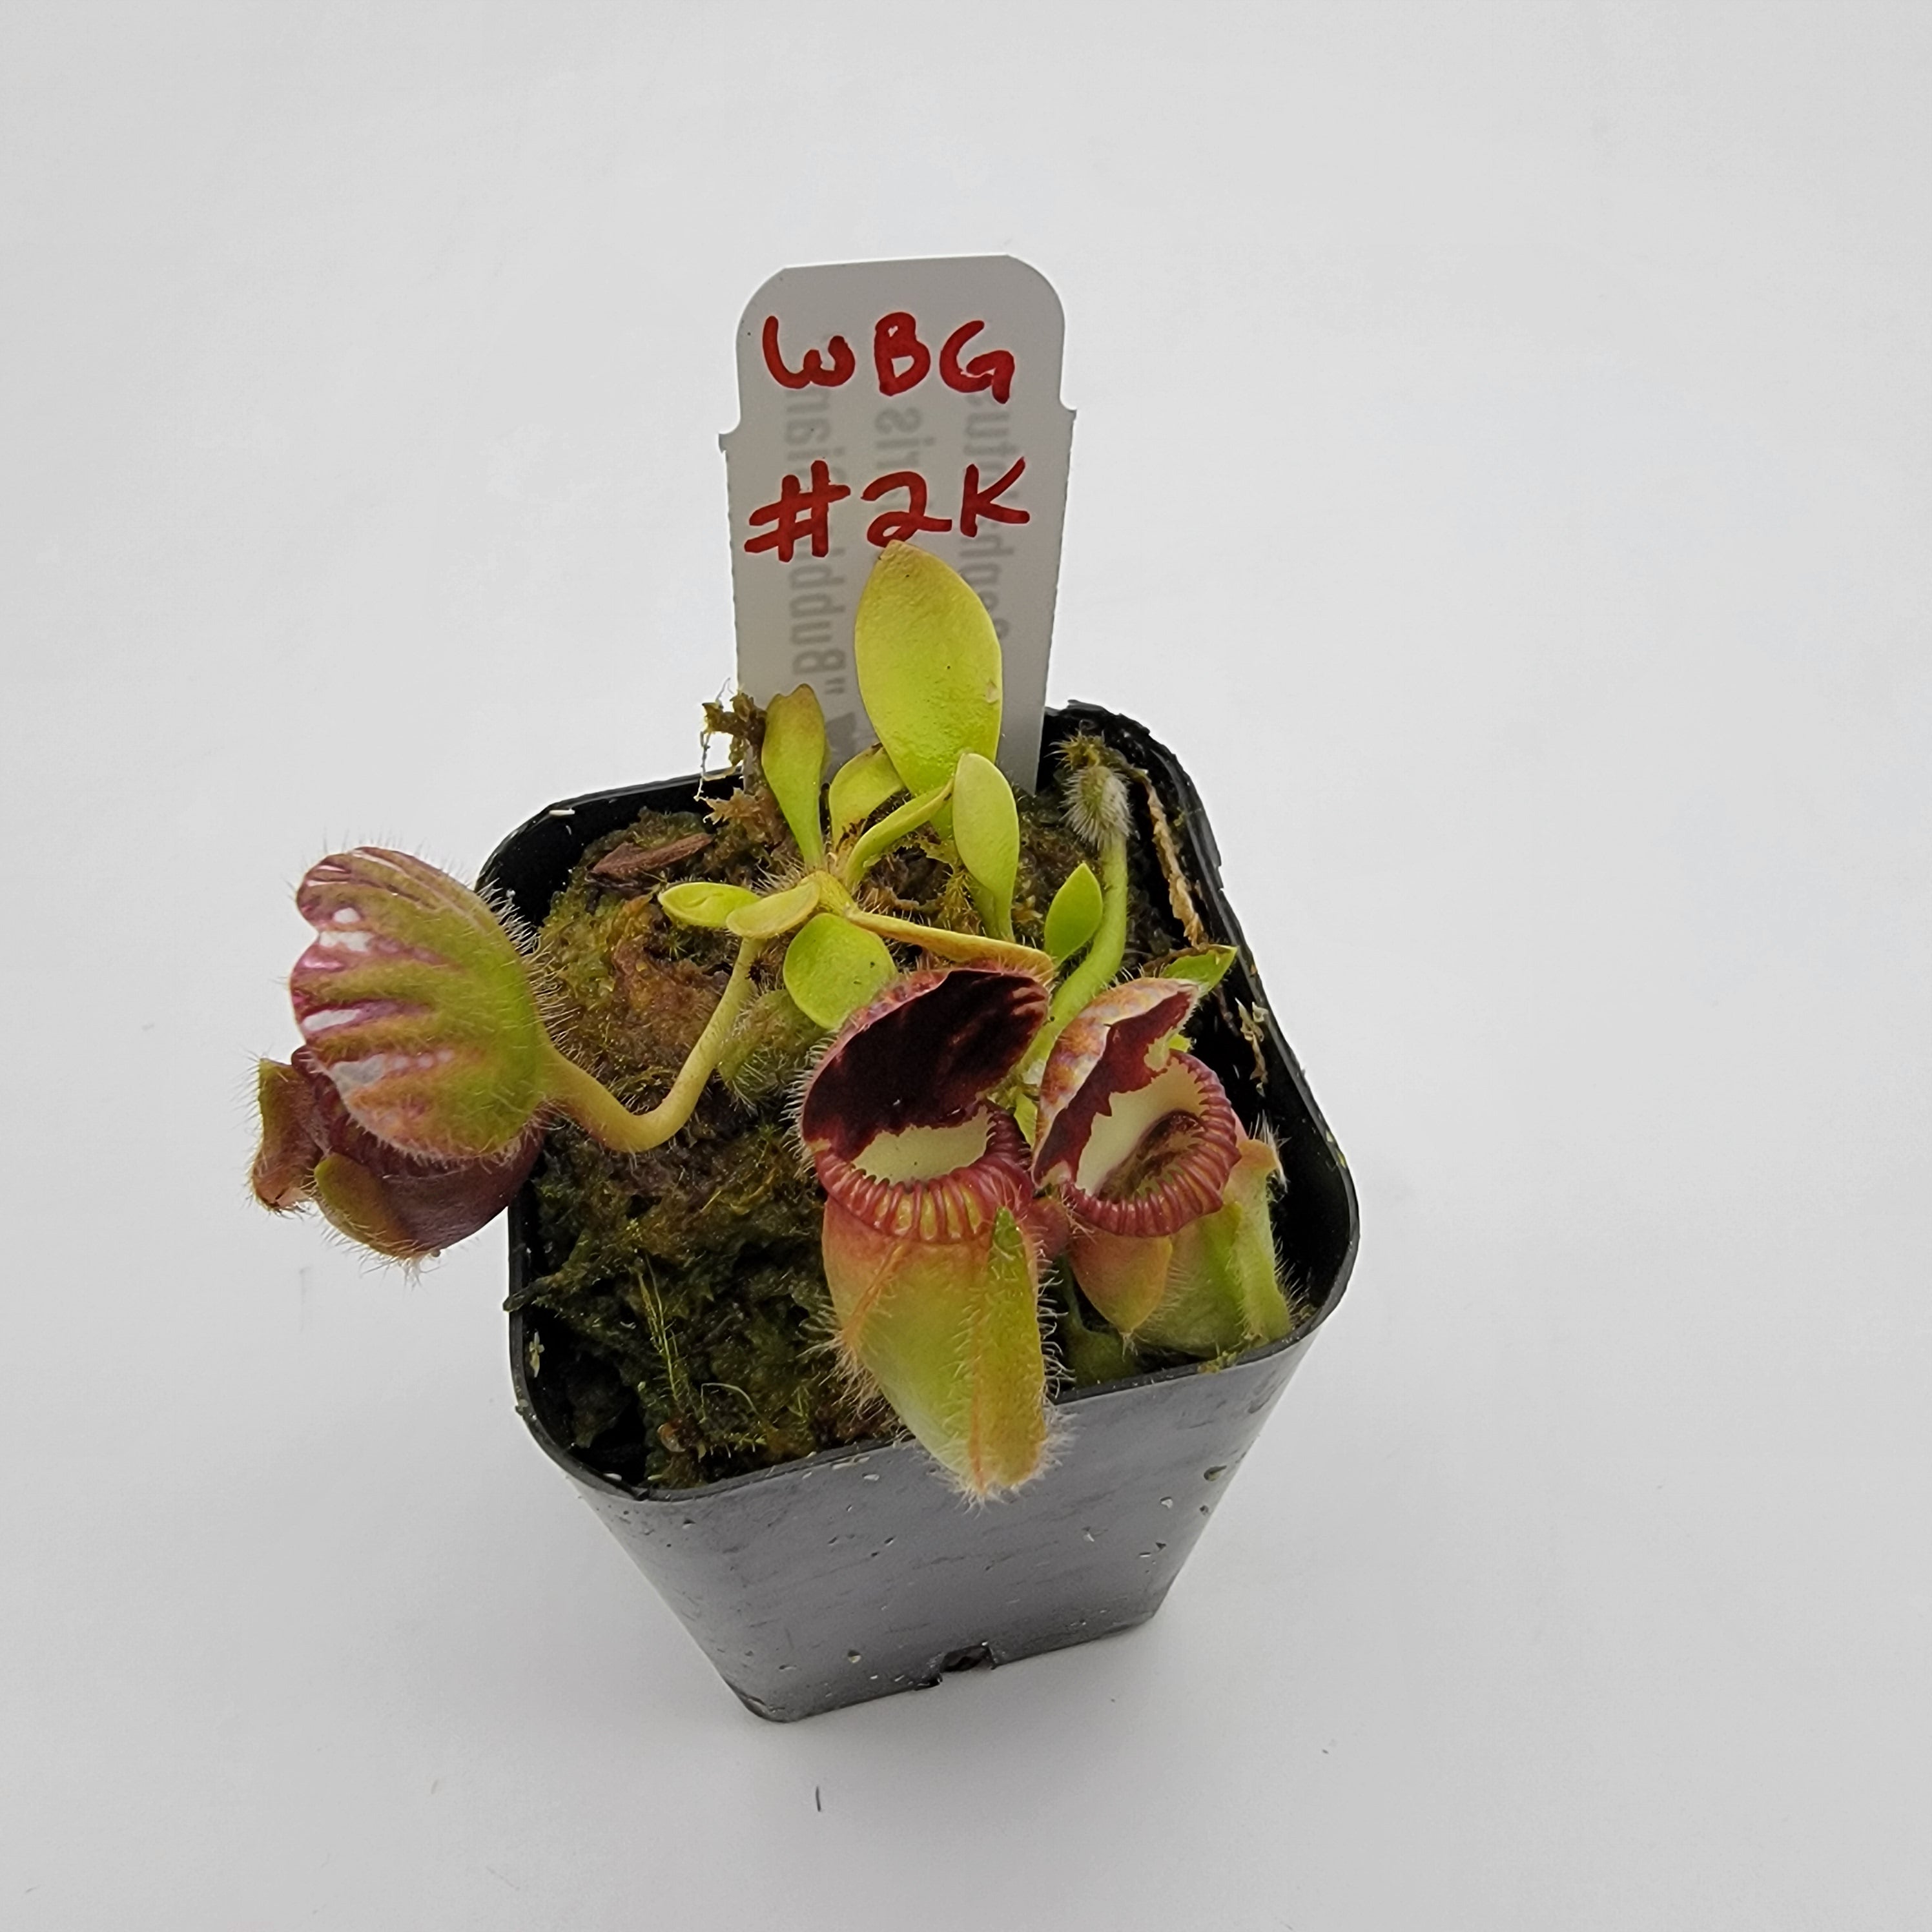 Cephalotus follicularis "Bubble Giant" WBG (1K-9K) - Rainbow Carnivorous Plants LLC